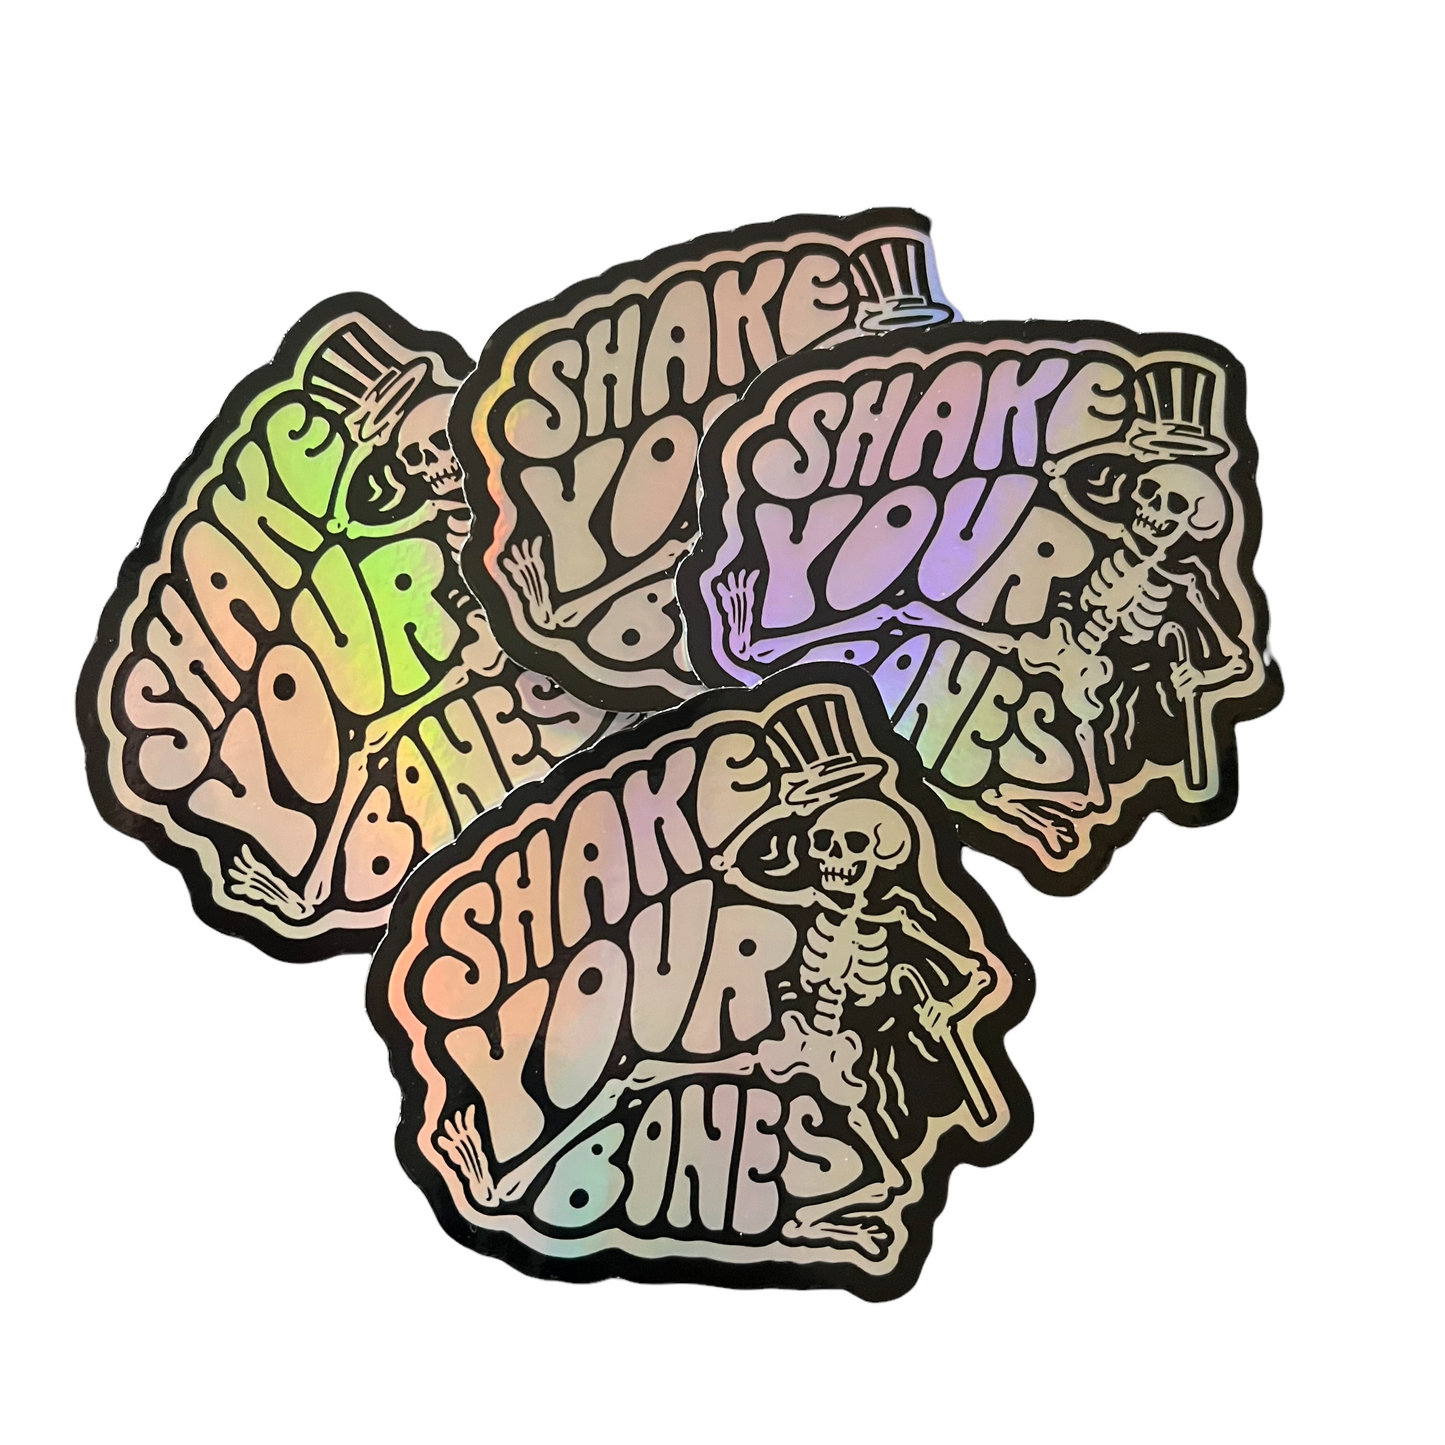 Shake your bones sticker